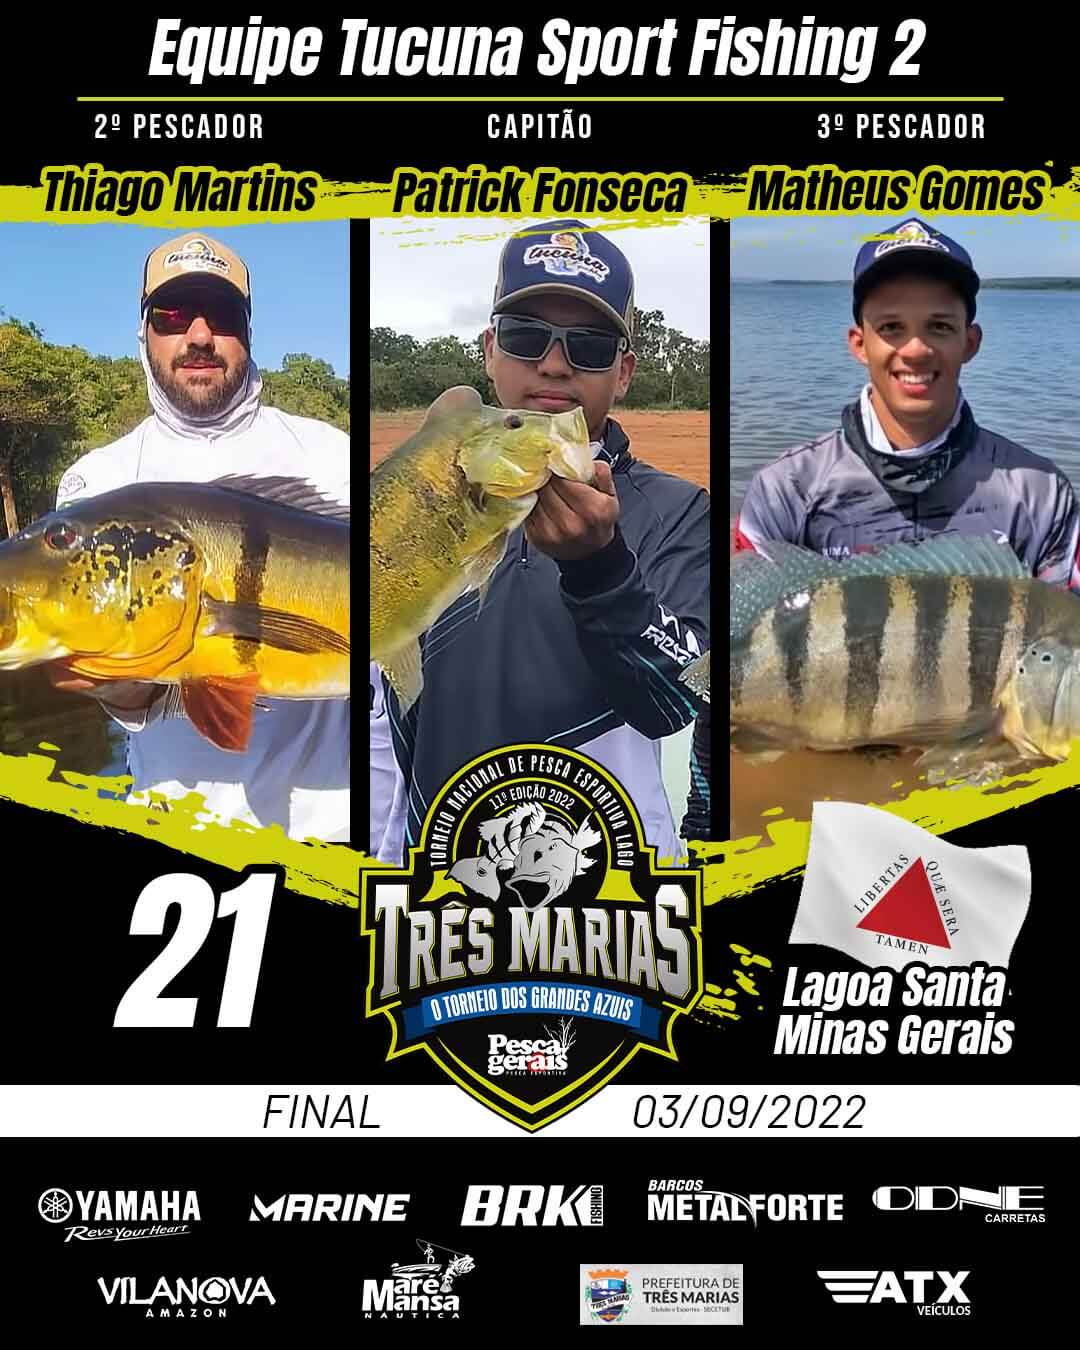 Tucuna Sport Fishing 2